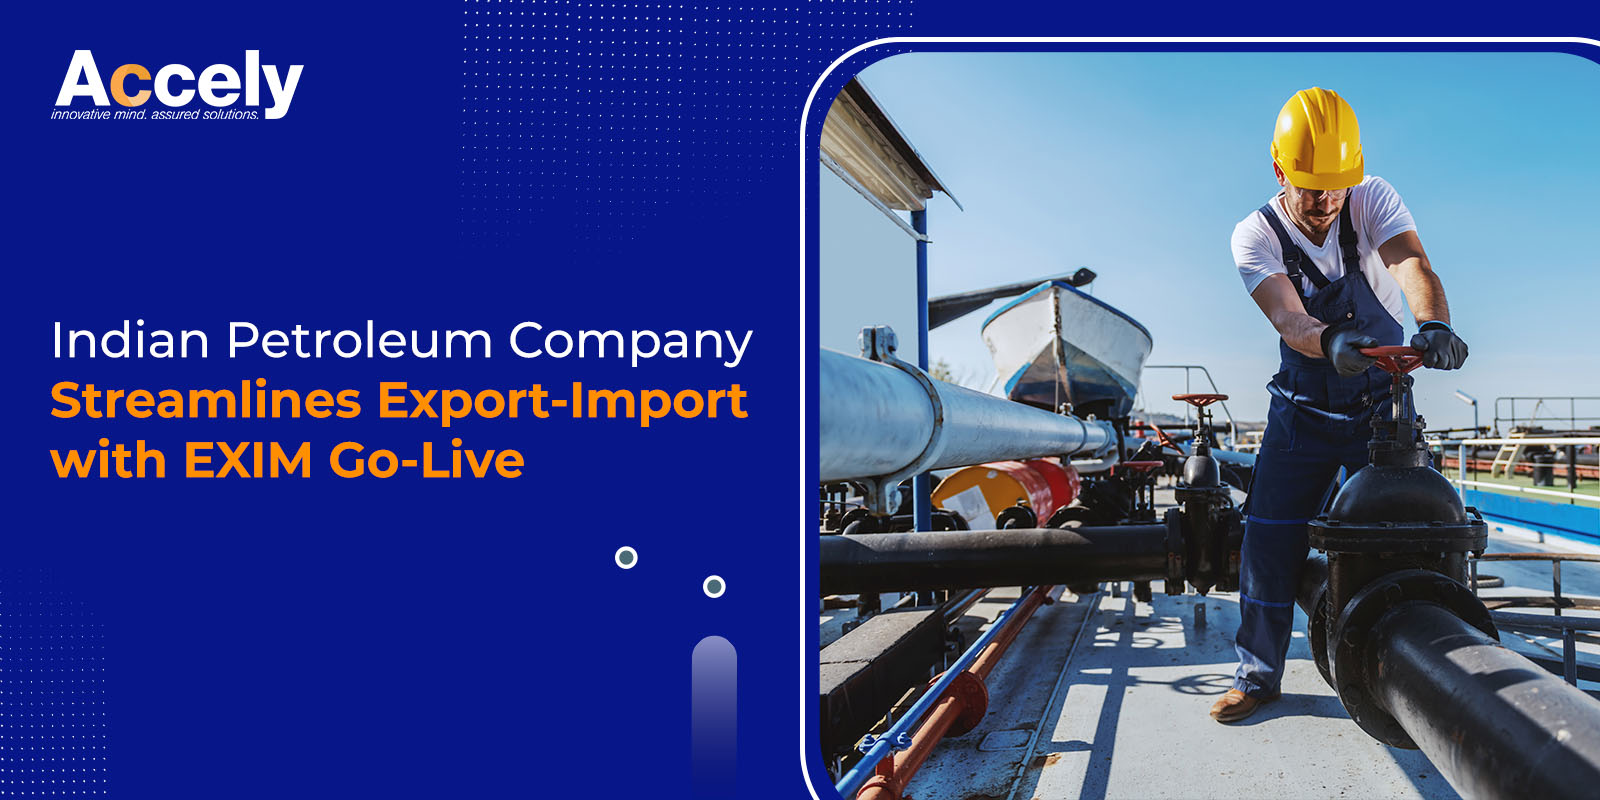 Indian Petroleum Company Streamlines Export-Import with EXIM Go-Live